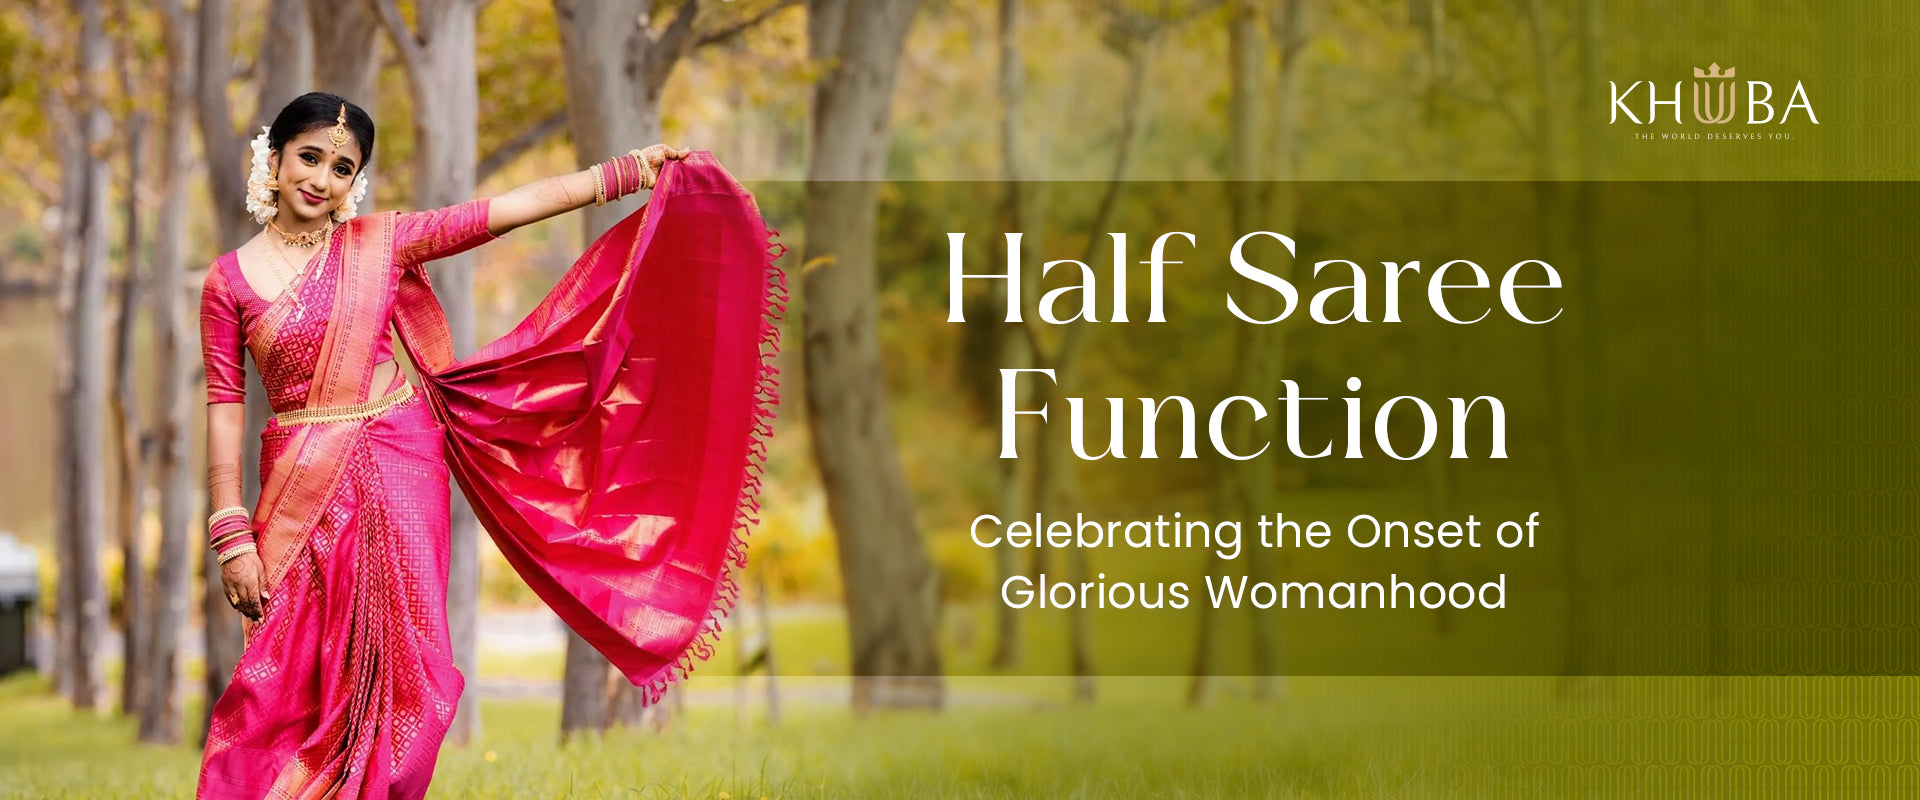 Half Saree Function: Celebrating the Onset of Glorious Womanhood